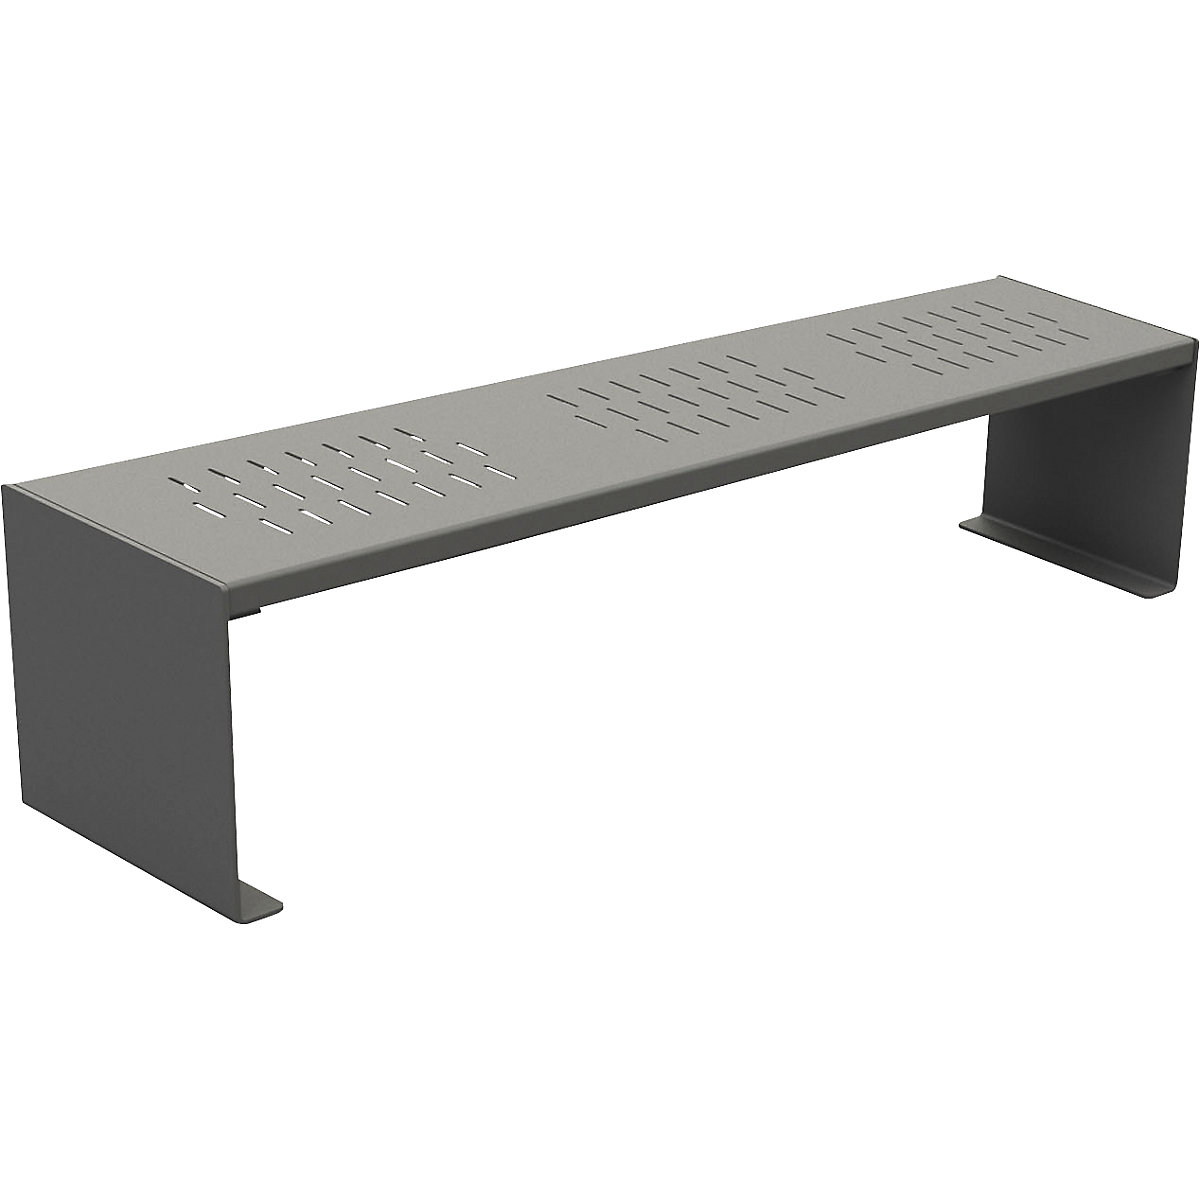 KUBE bench made of steel - PROCITY